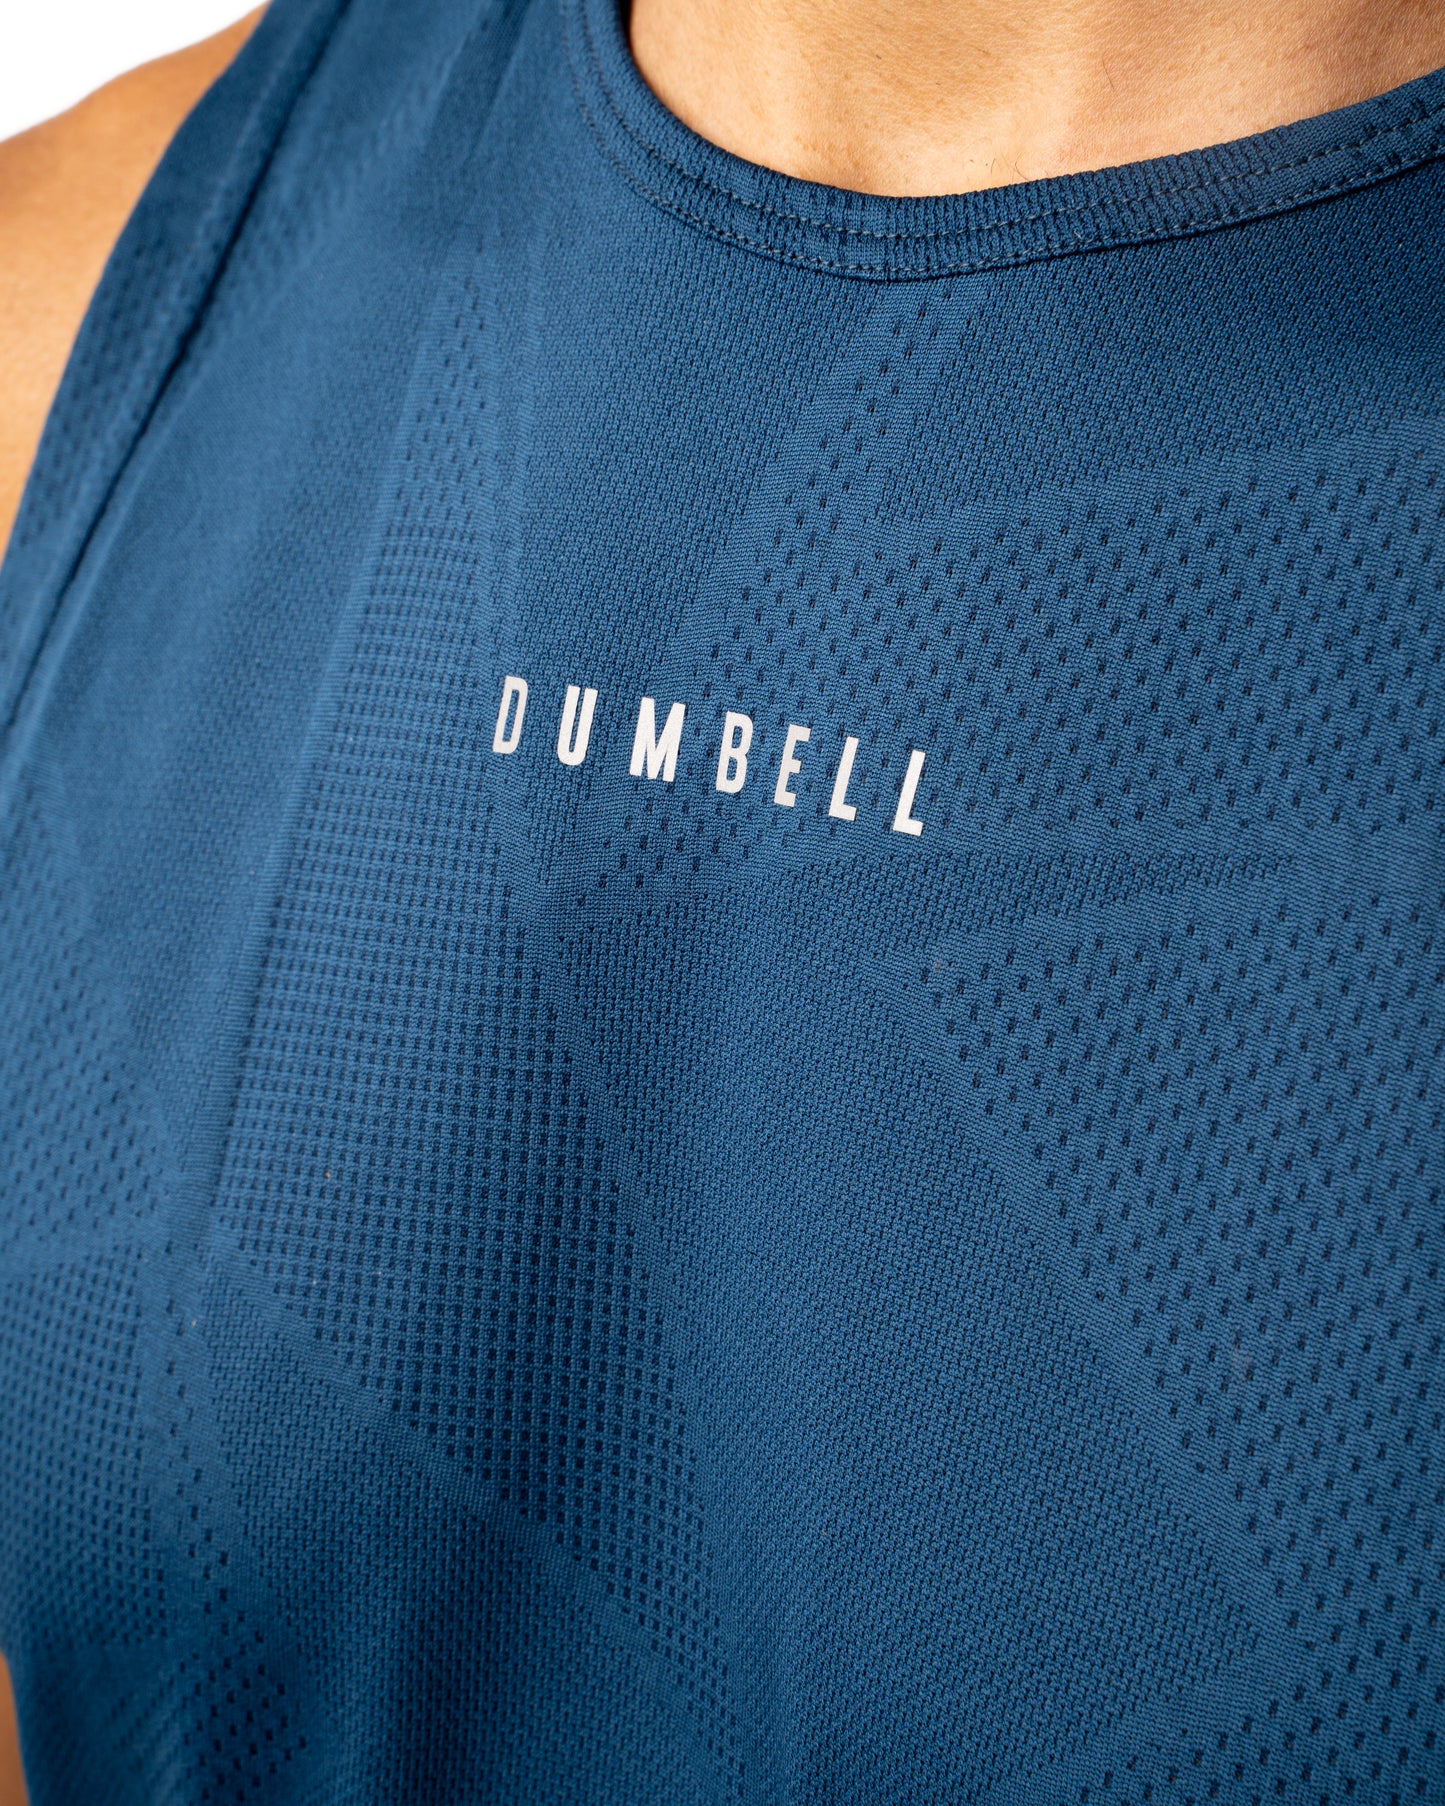 Dumbell Wear Men's Steel Blue Performance Sleeveless Tees